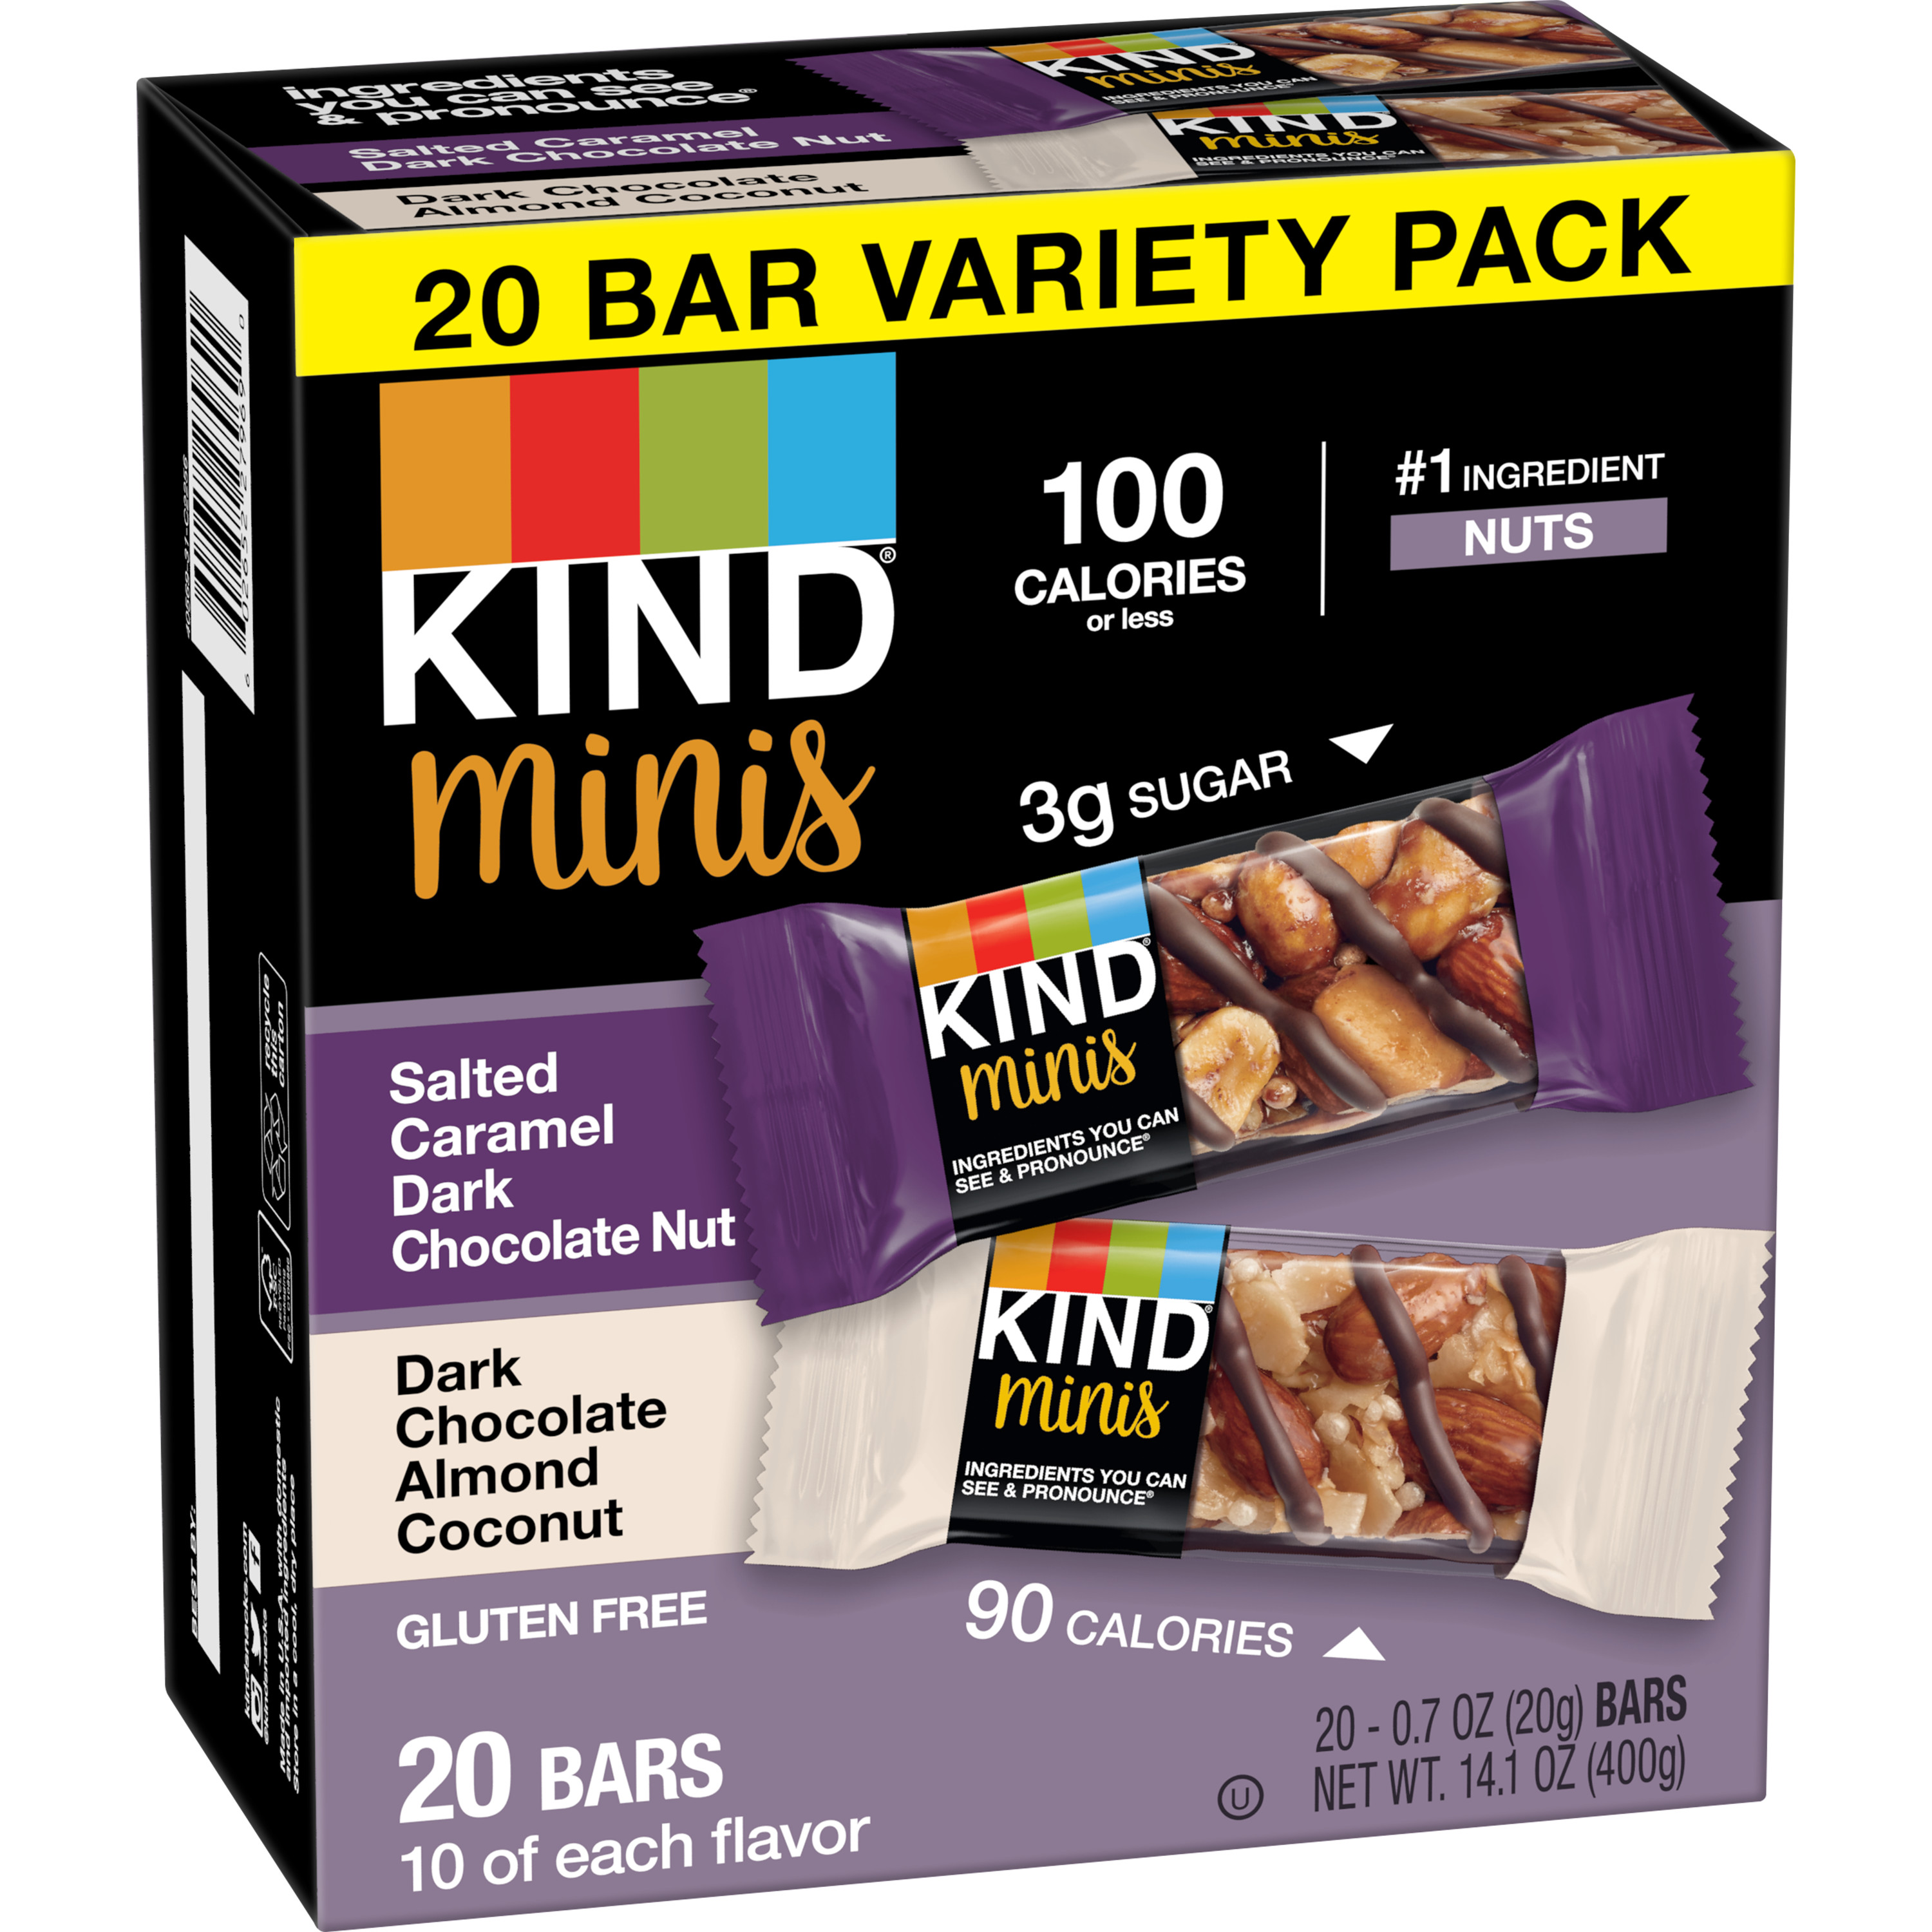 Kind Minis Salted Caramel Dark Chocolate Nut And Dark Chocolate Almond Coconut Bars Variety Pack